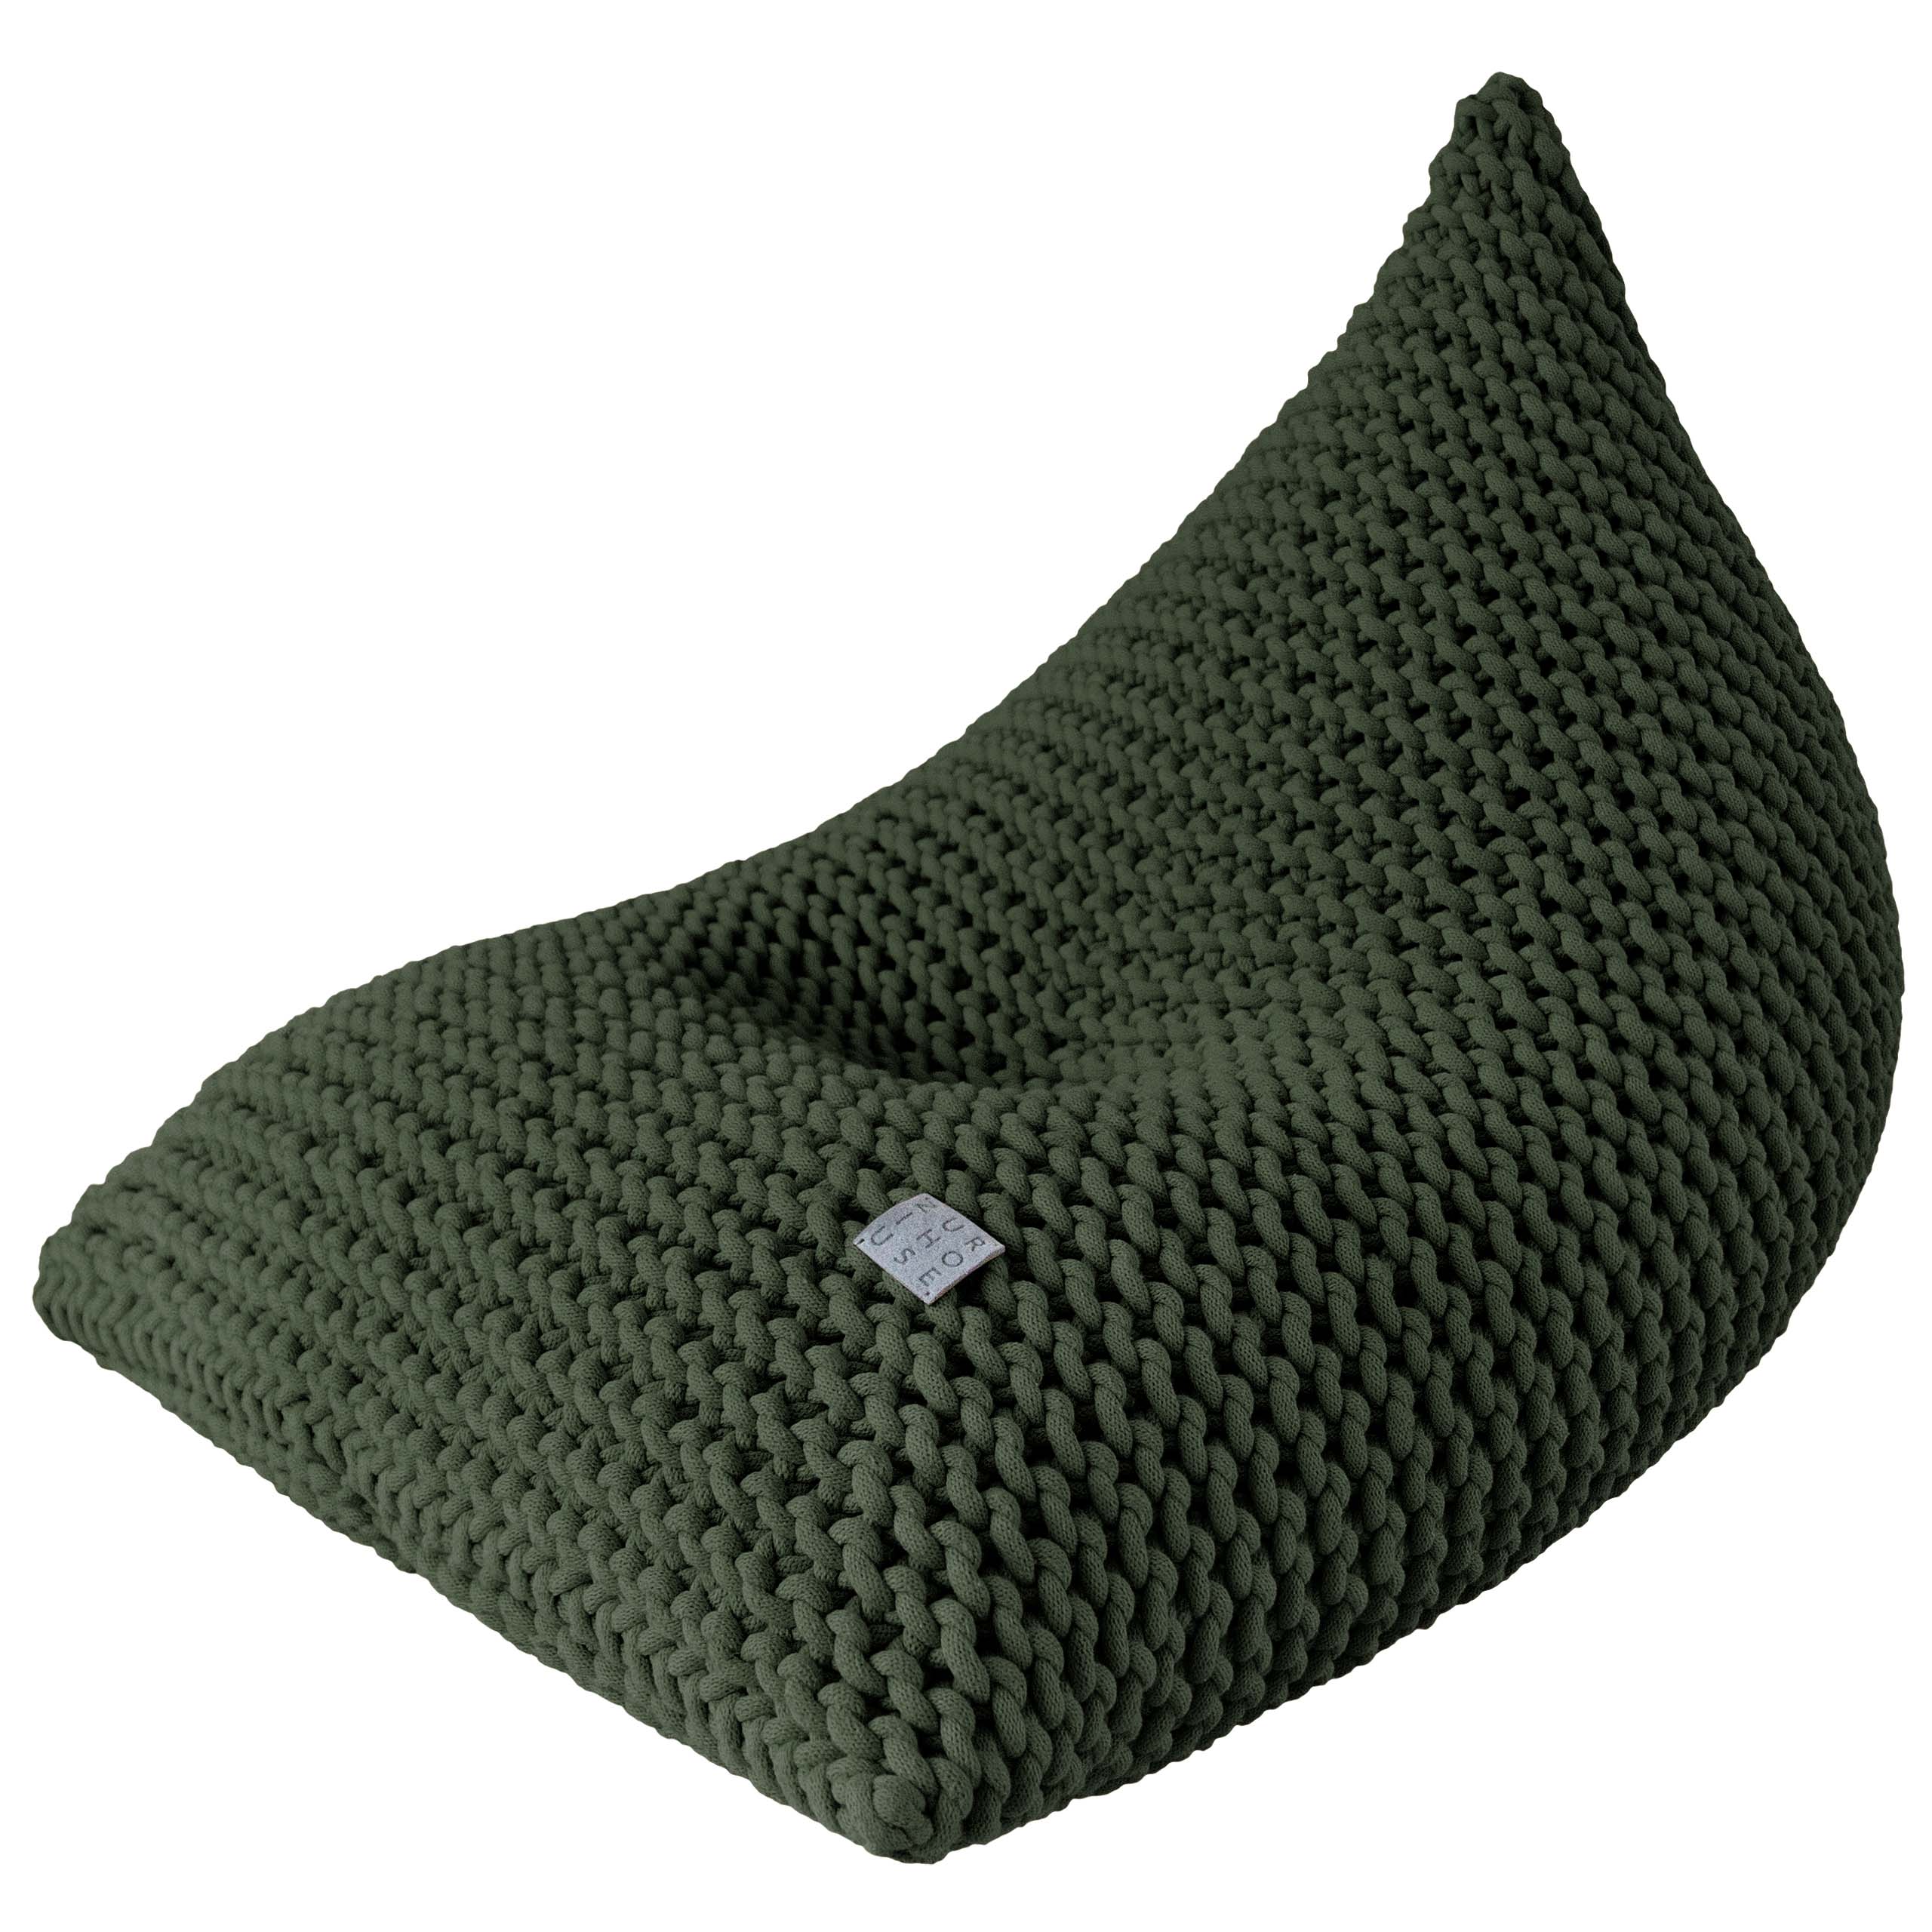 Zuri House Chunky Knitted Bean Bag | OLIVE GREEN - FILLED 80 x 120 x 80cm / 32'' x 48'' x 32''